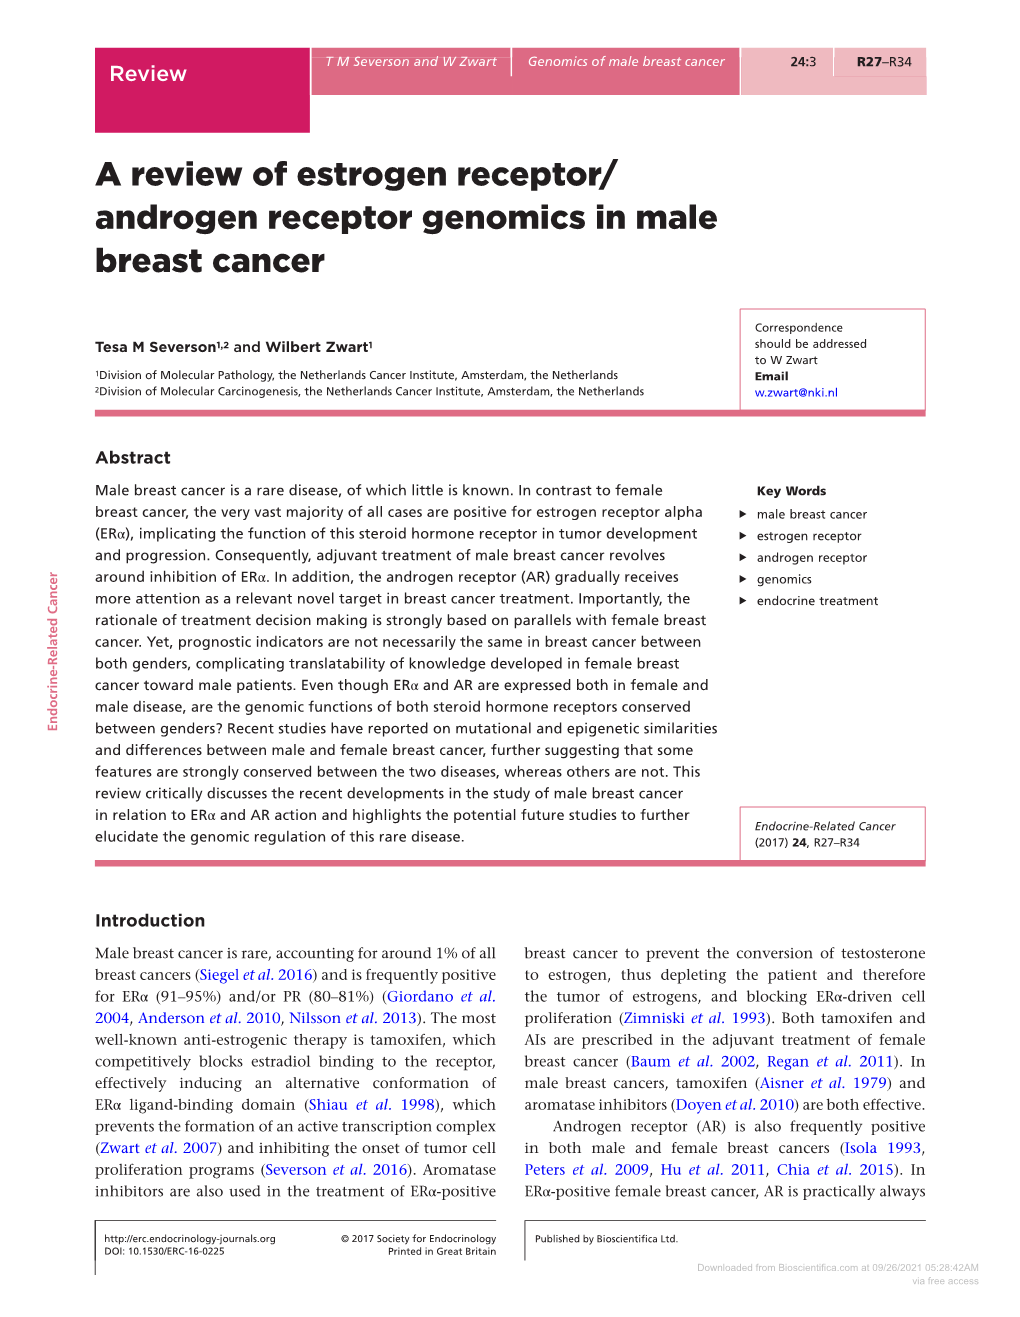 A Review of Estrogen Receptor/Androgen Receptor